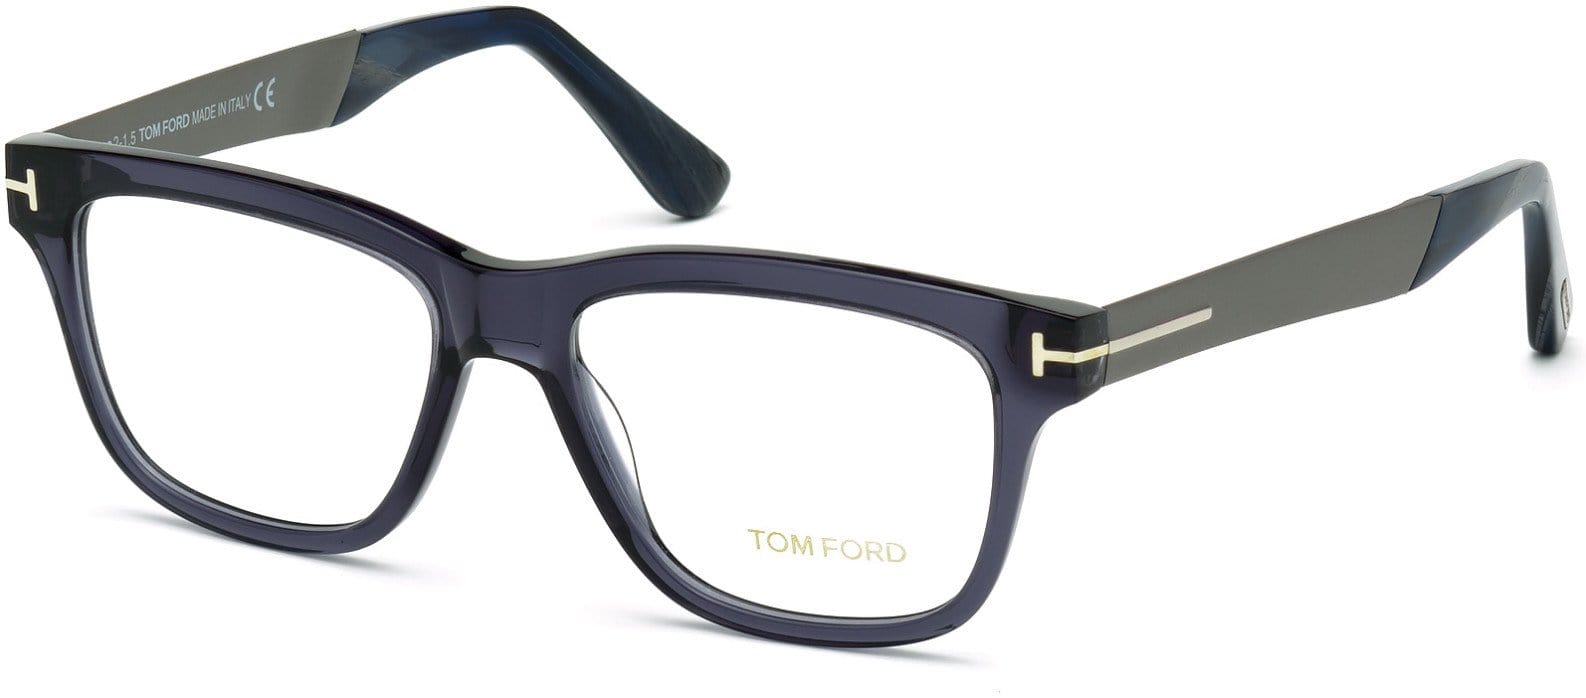 Tom Ford FT5372 Geometric Eyeglasses 090-090 - Shiny Transparent Blue, Sanded Dark Ruthenium